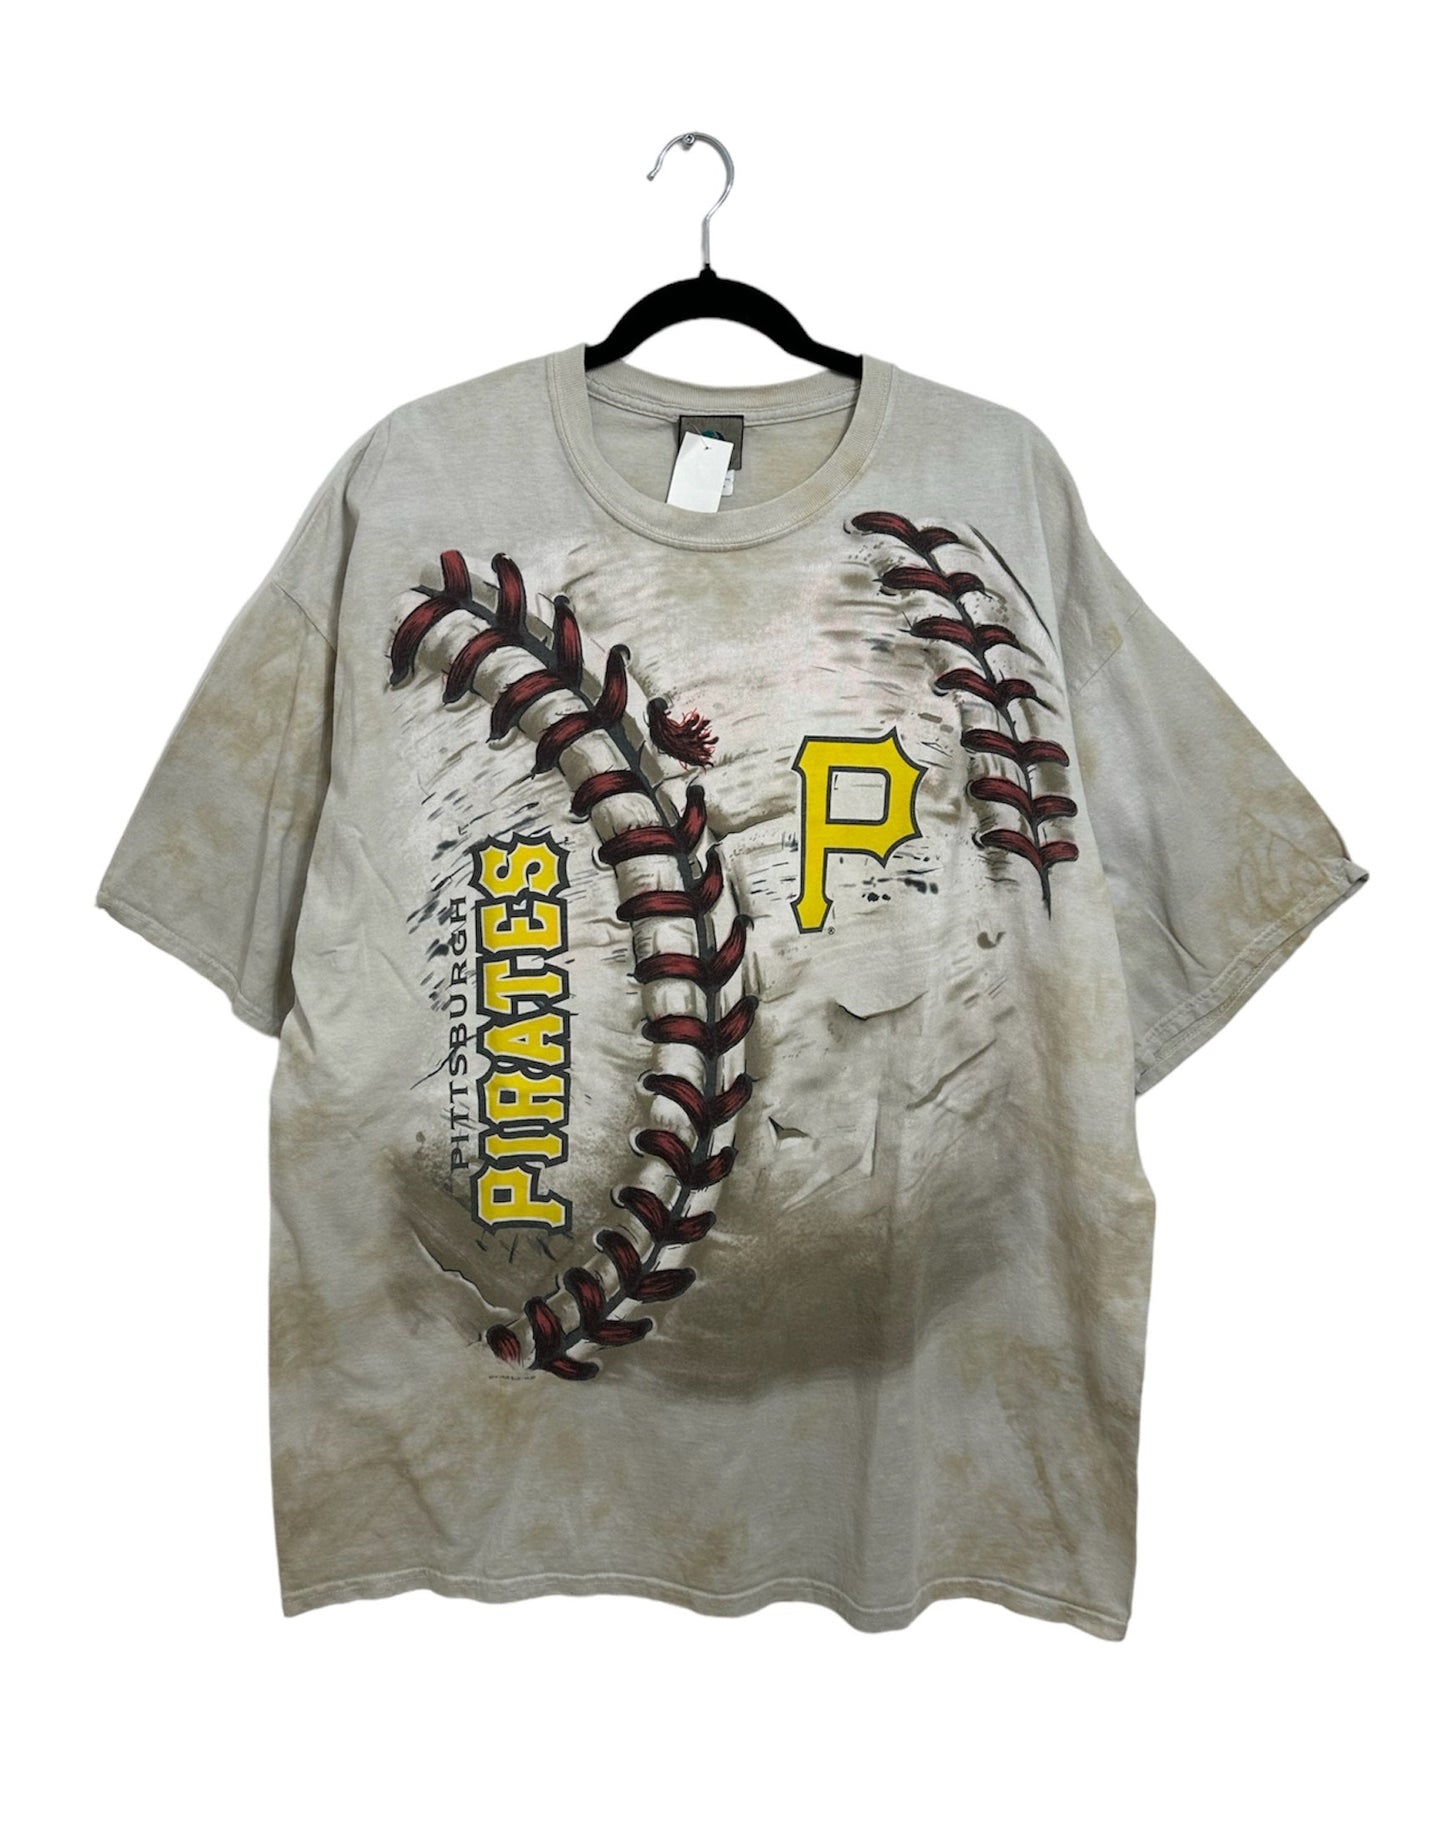 Pittsburgh Pirates t-shirt